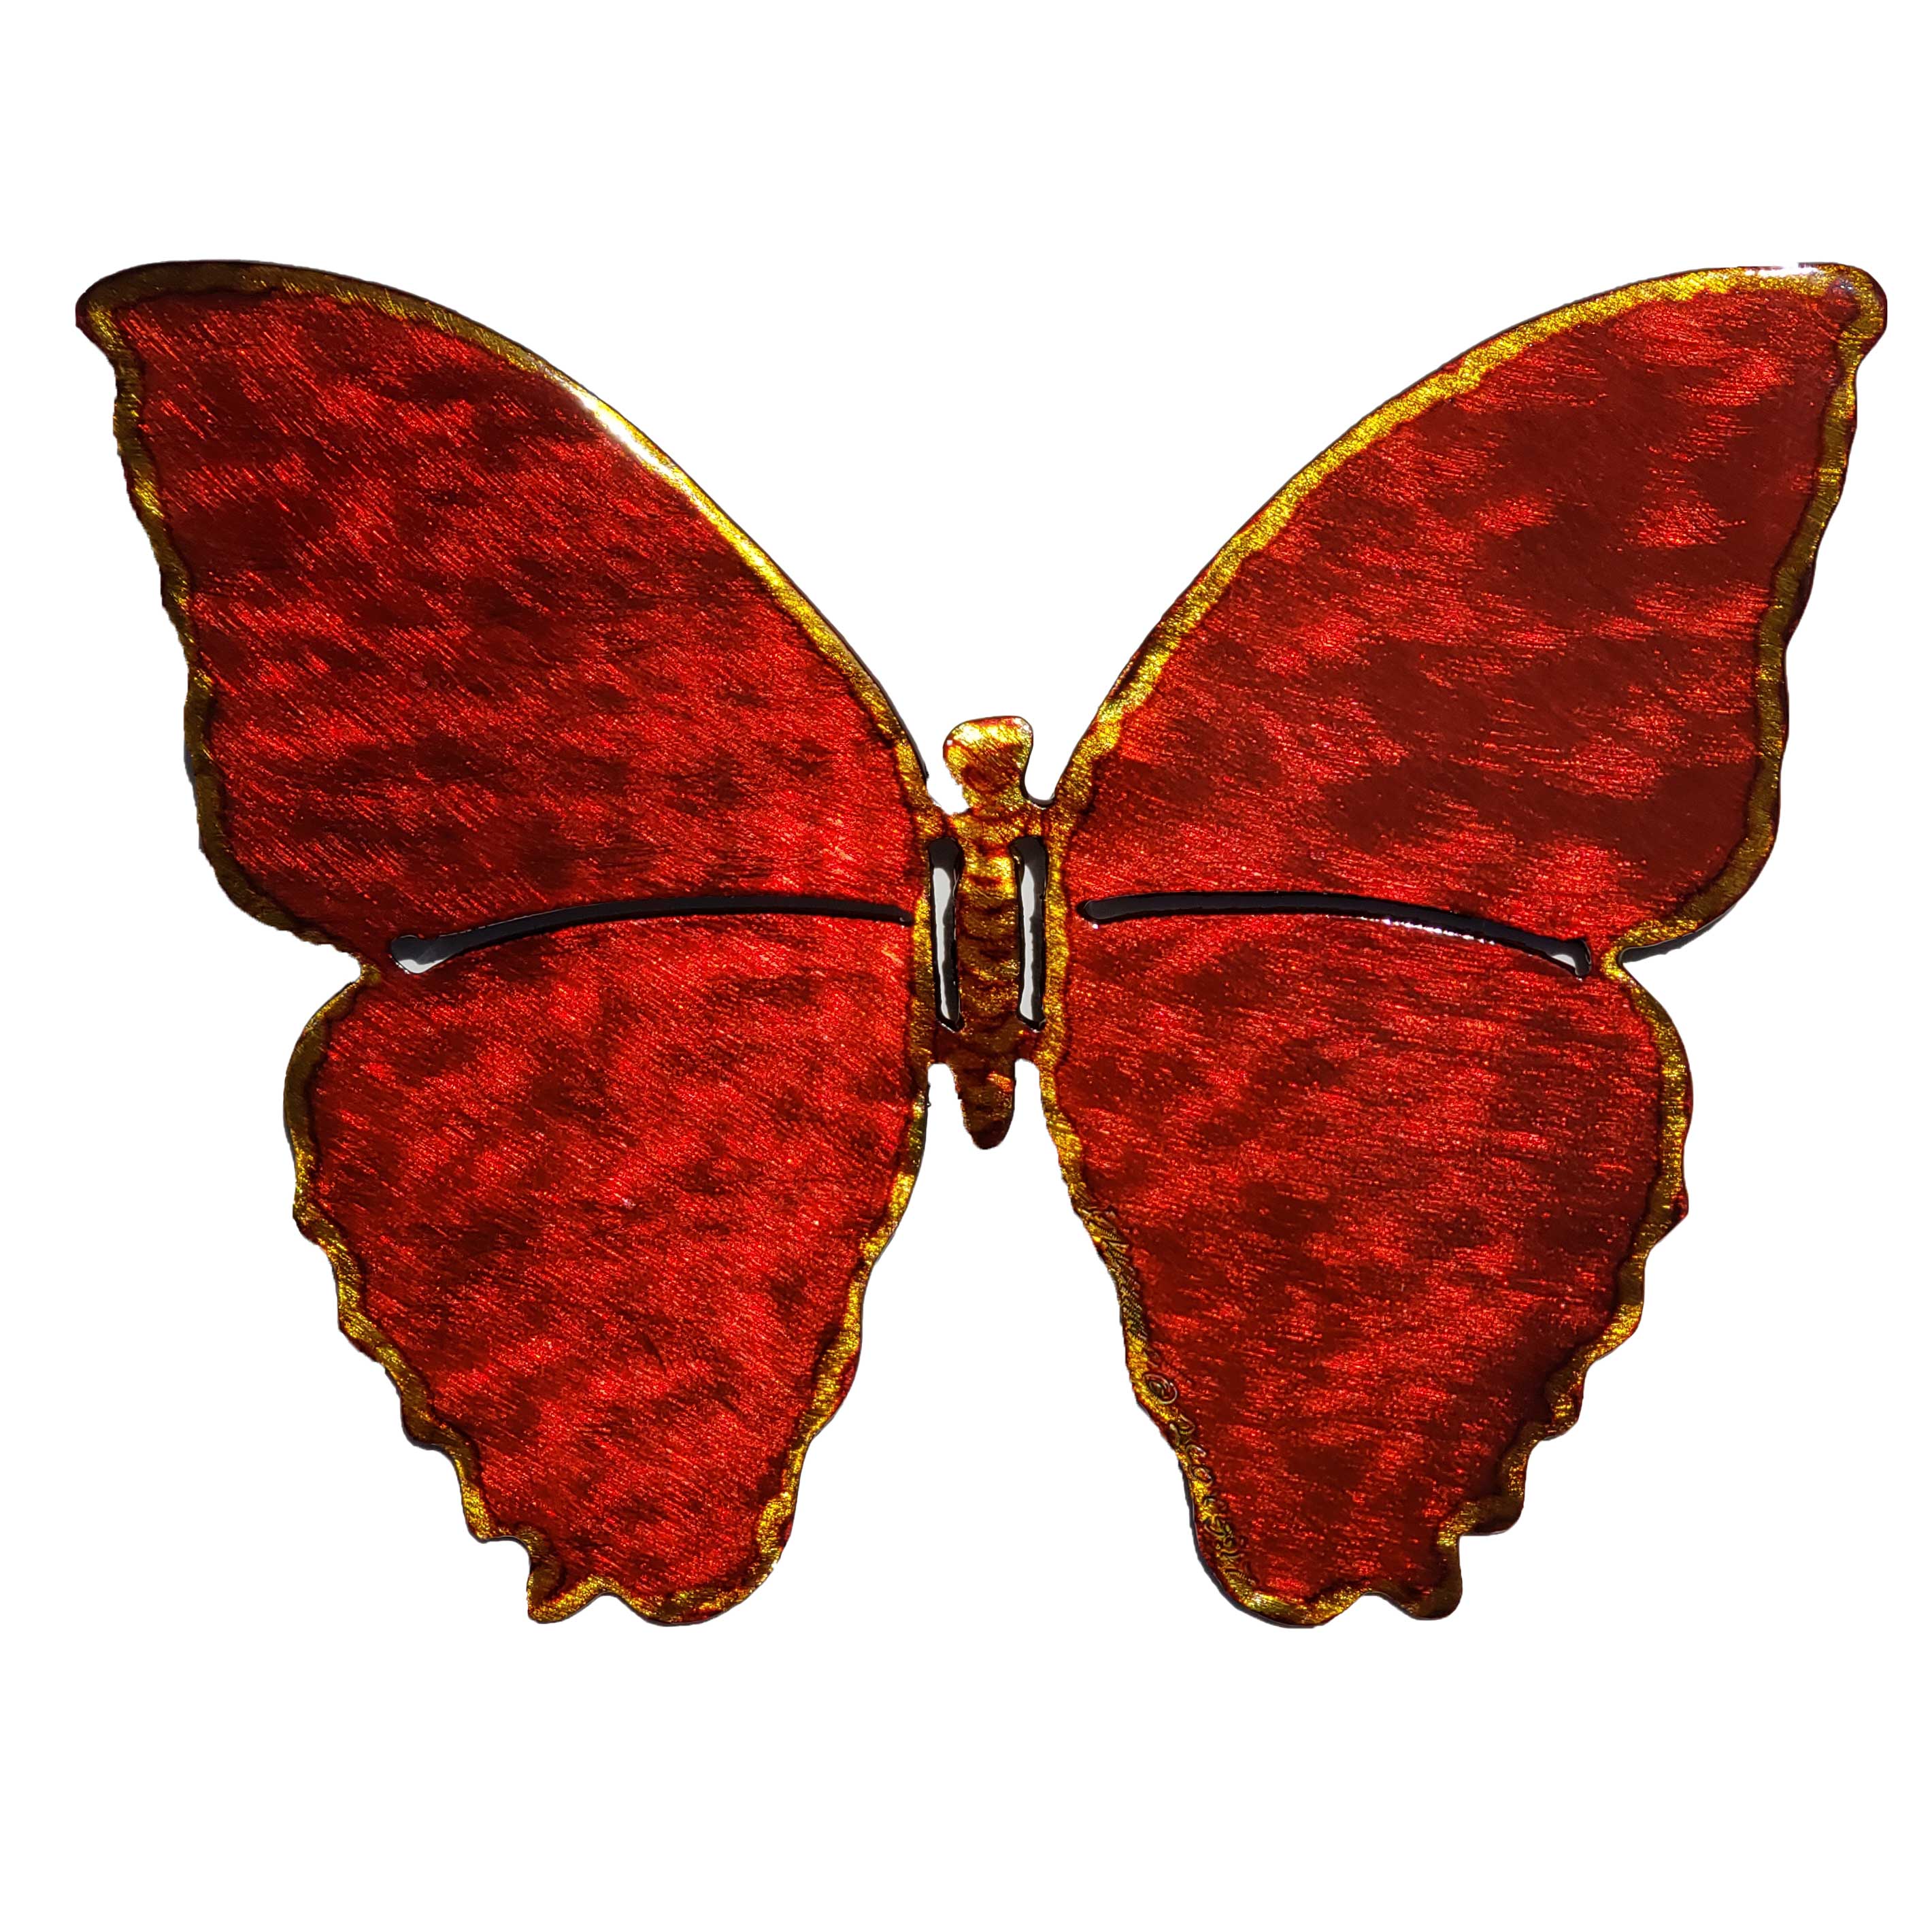 Butterfly Art by David Broussard is eye-catching metal art.